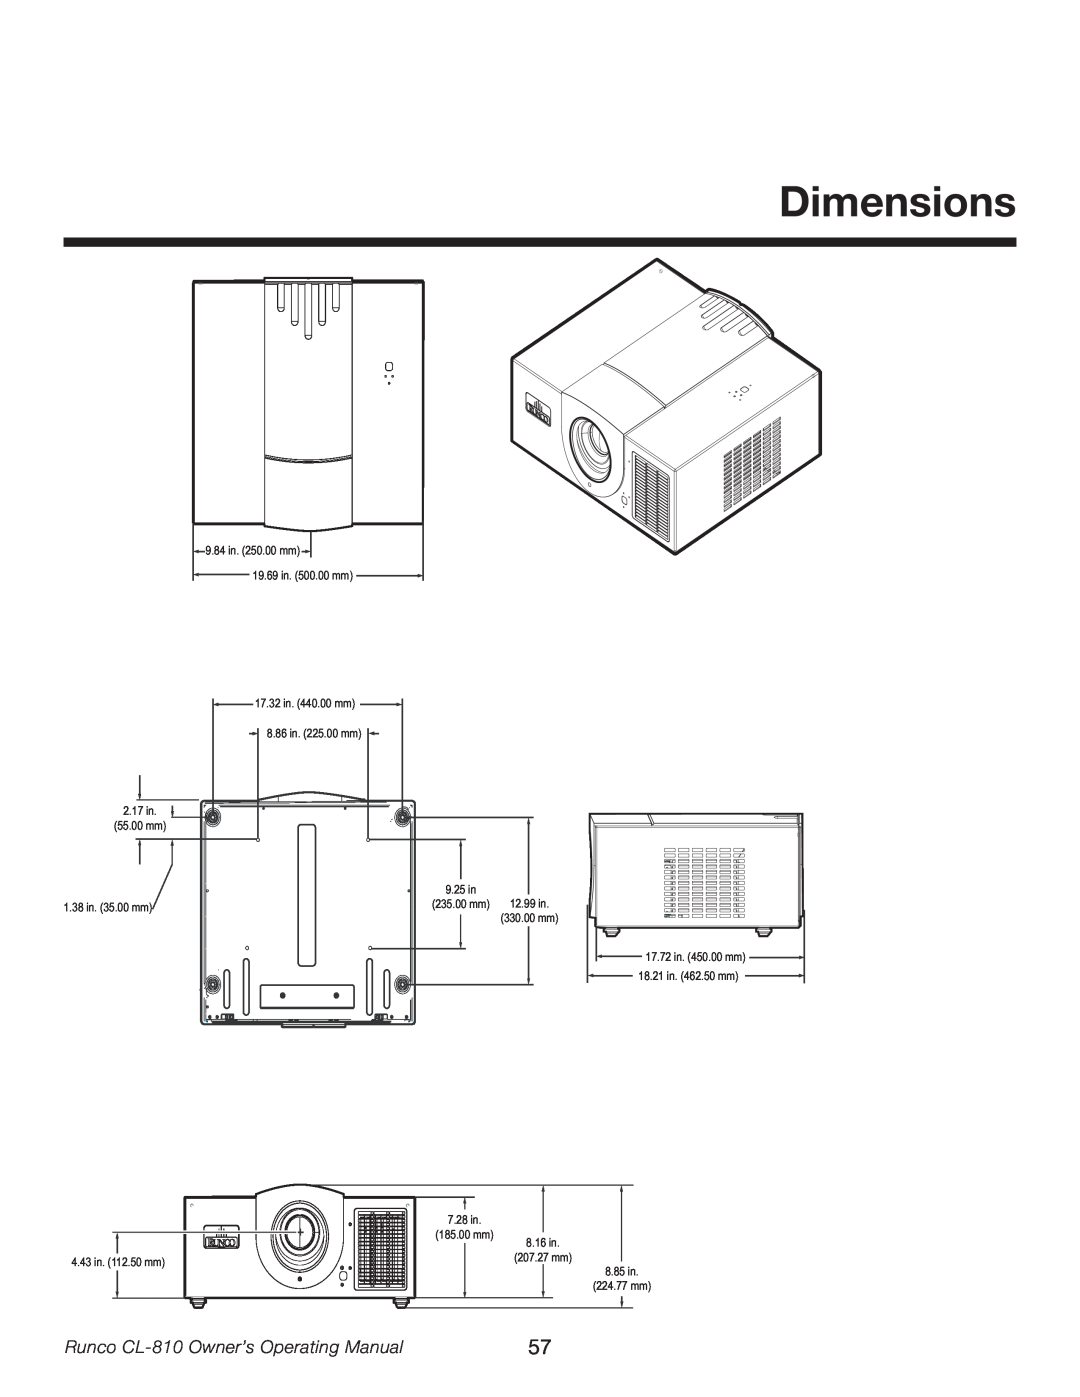 Runco Dimensions, Runco CL-810 Owner’s Operating Manual, 9.84 in. 250.00 mm 19.69 in. 500.00 mm 17.32 in. 440.00 mm 